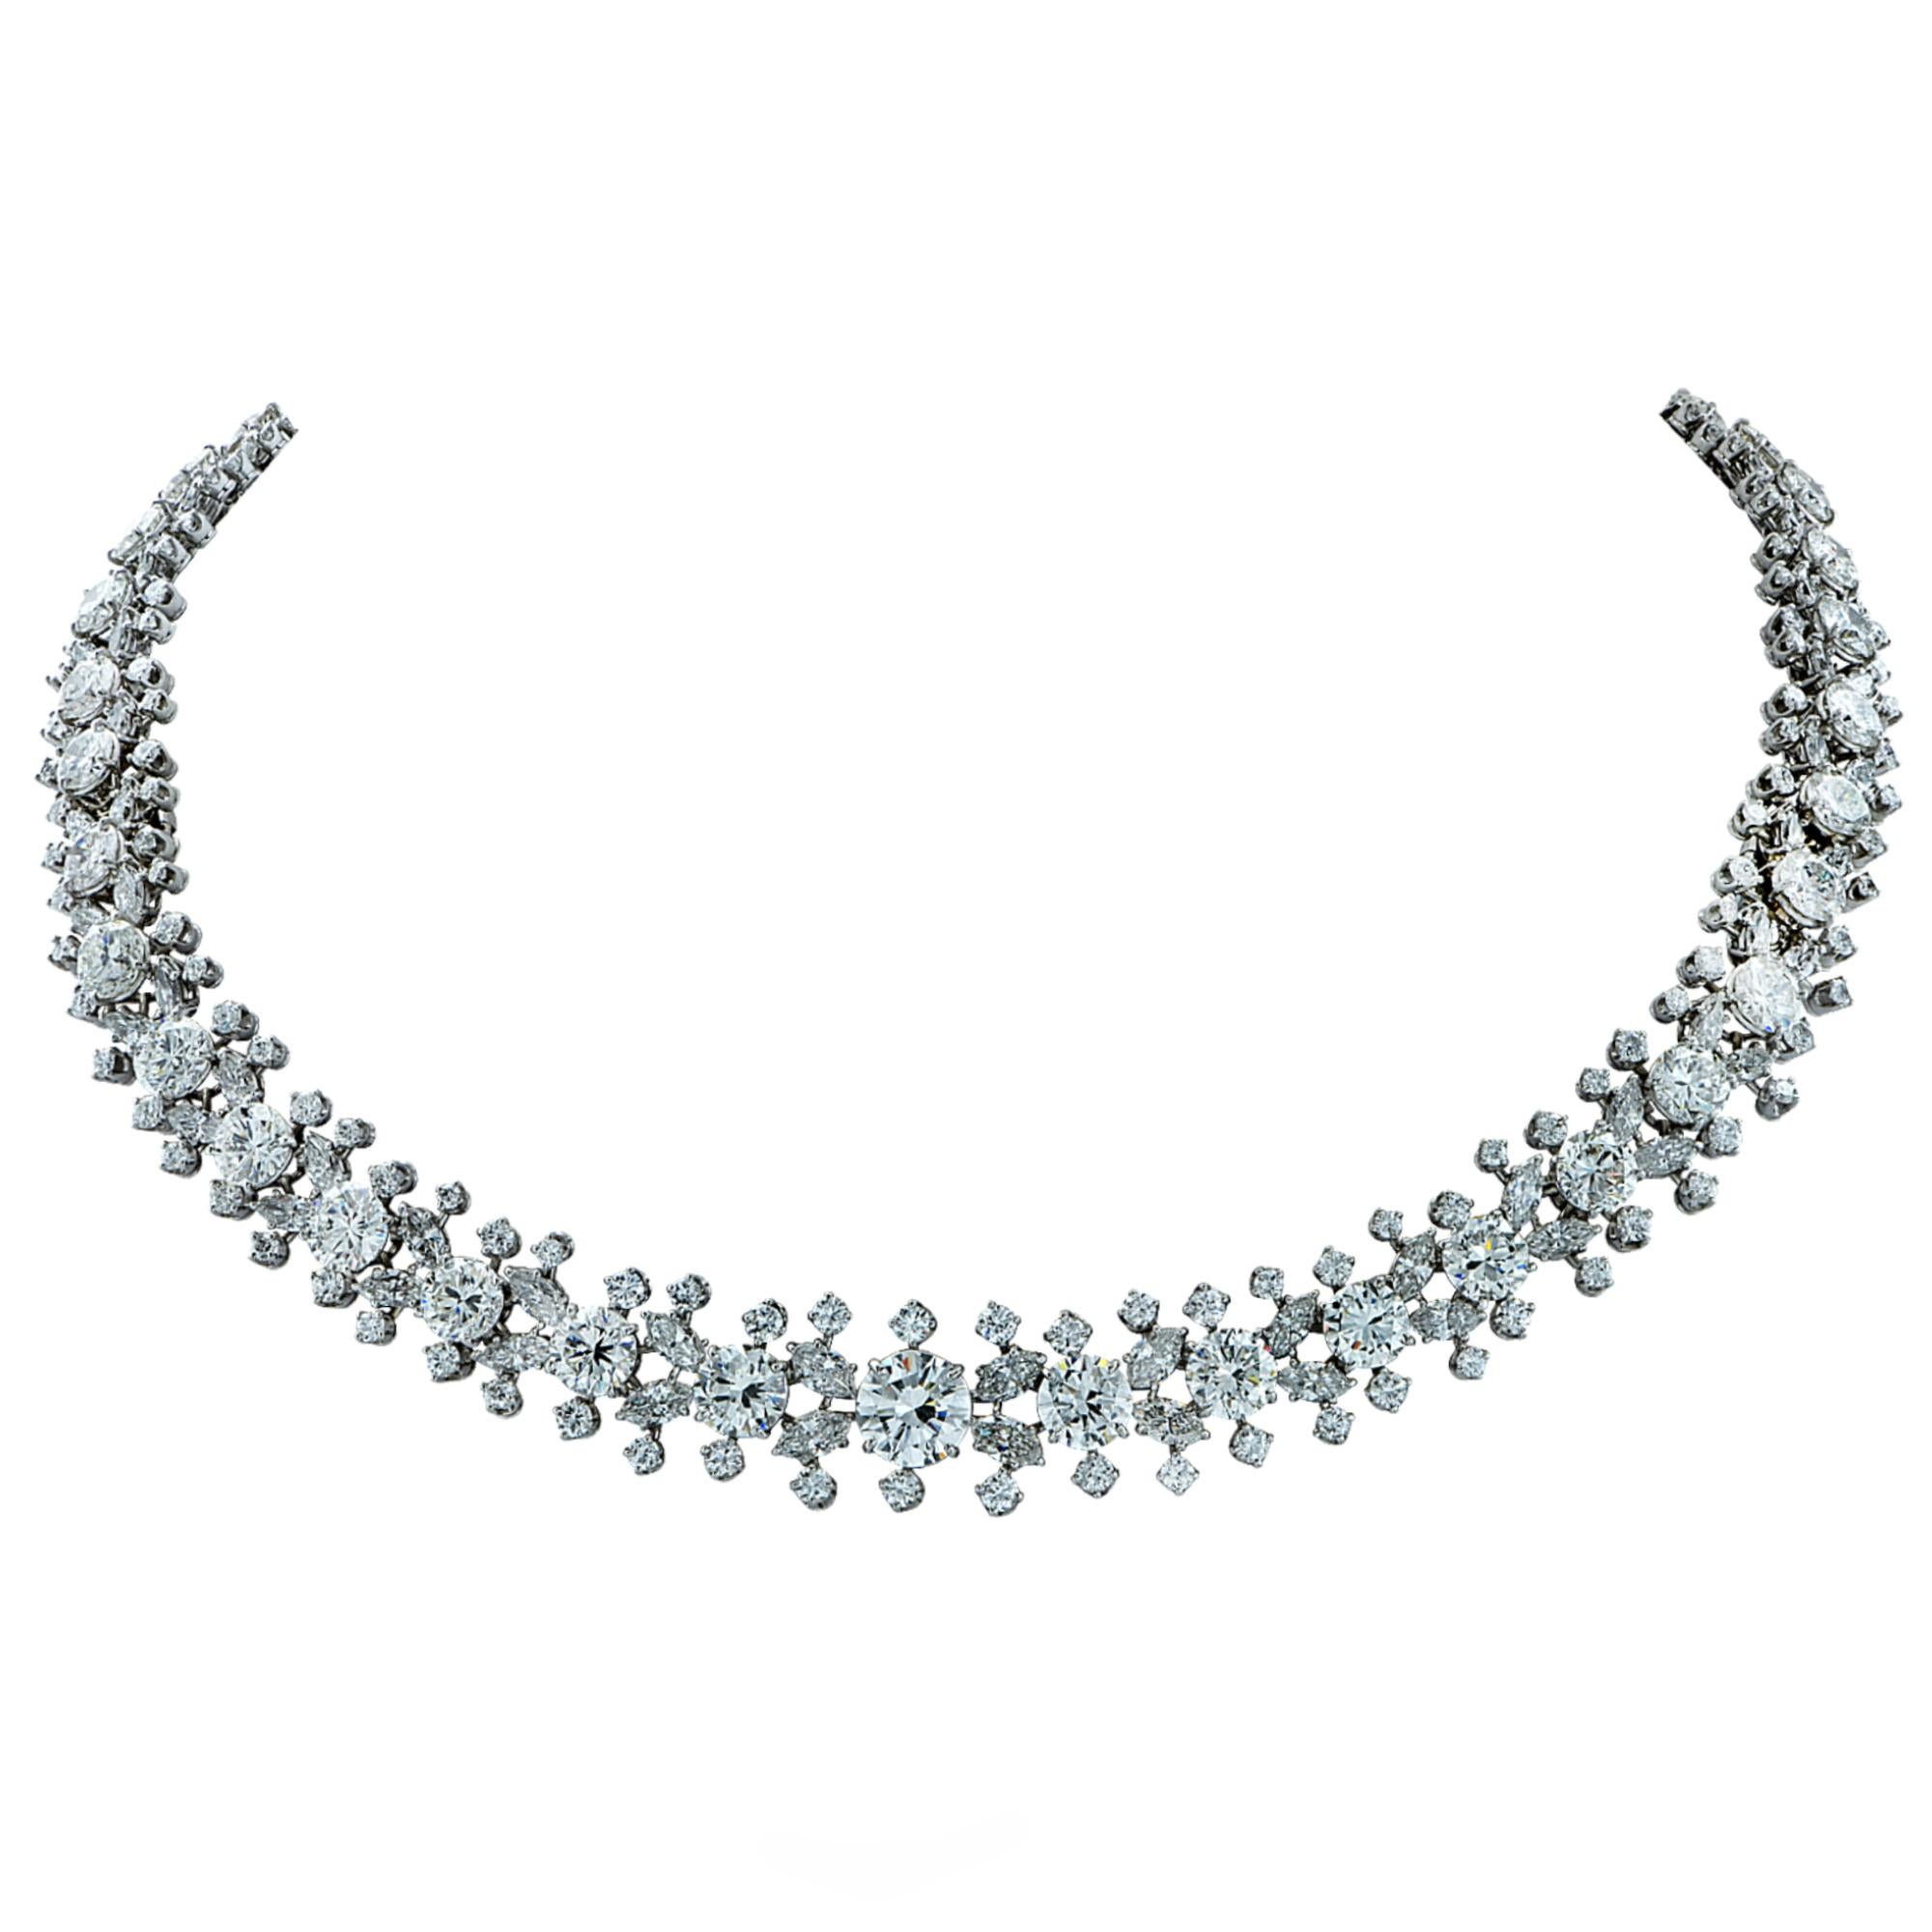 Important Midcentury Harry Winston 52 Carat Diamond Necklace Bracelet Set